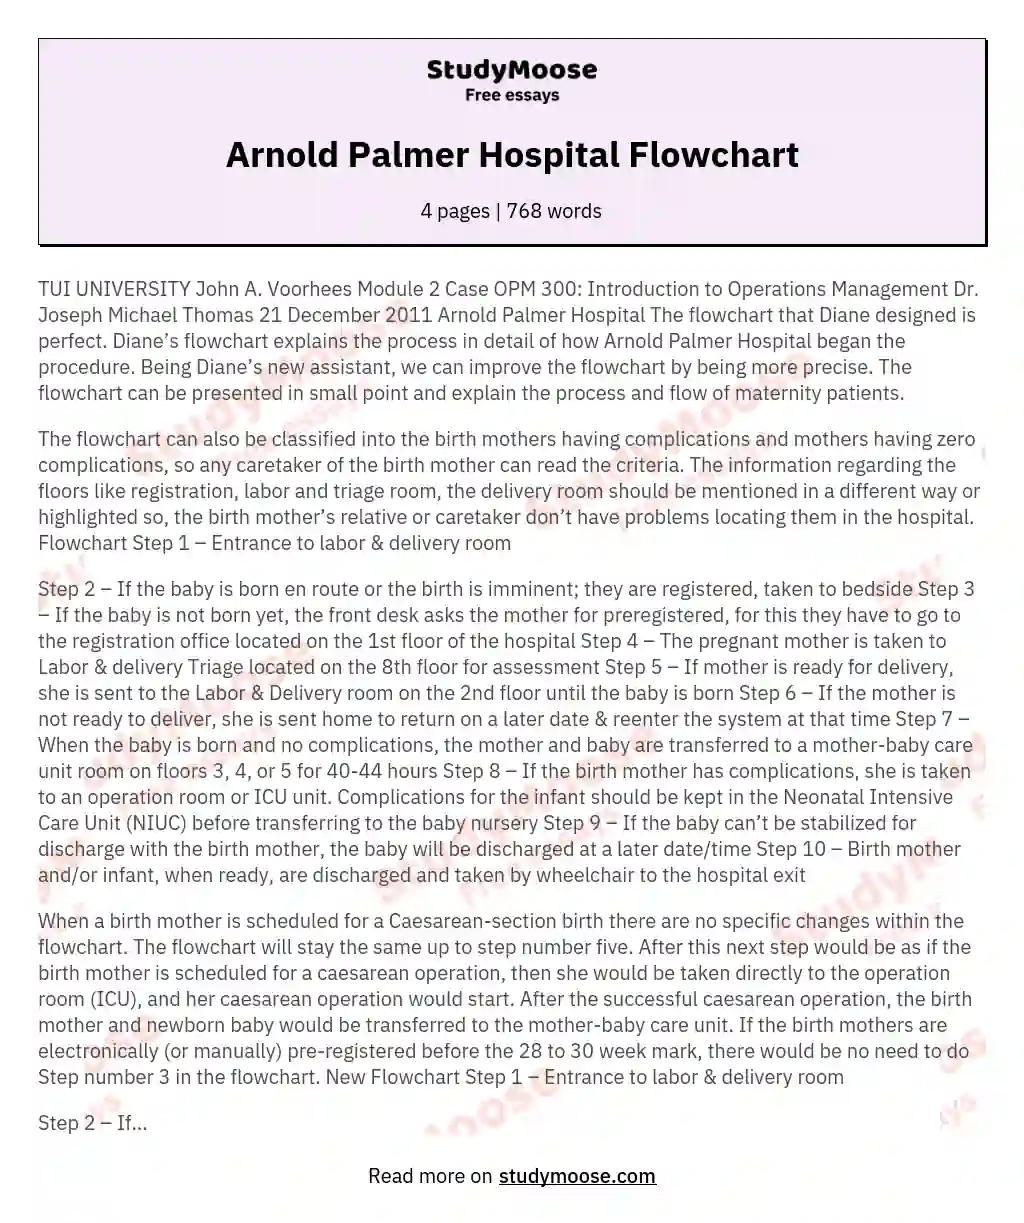 Arnold Palmer Hospital Flowchart essay